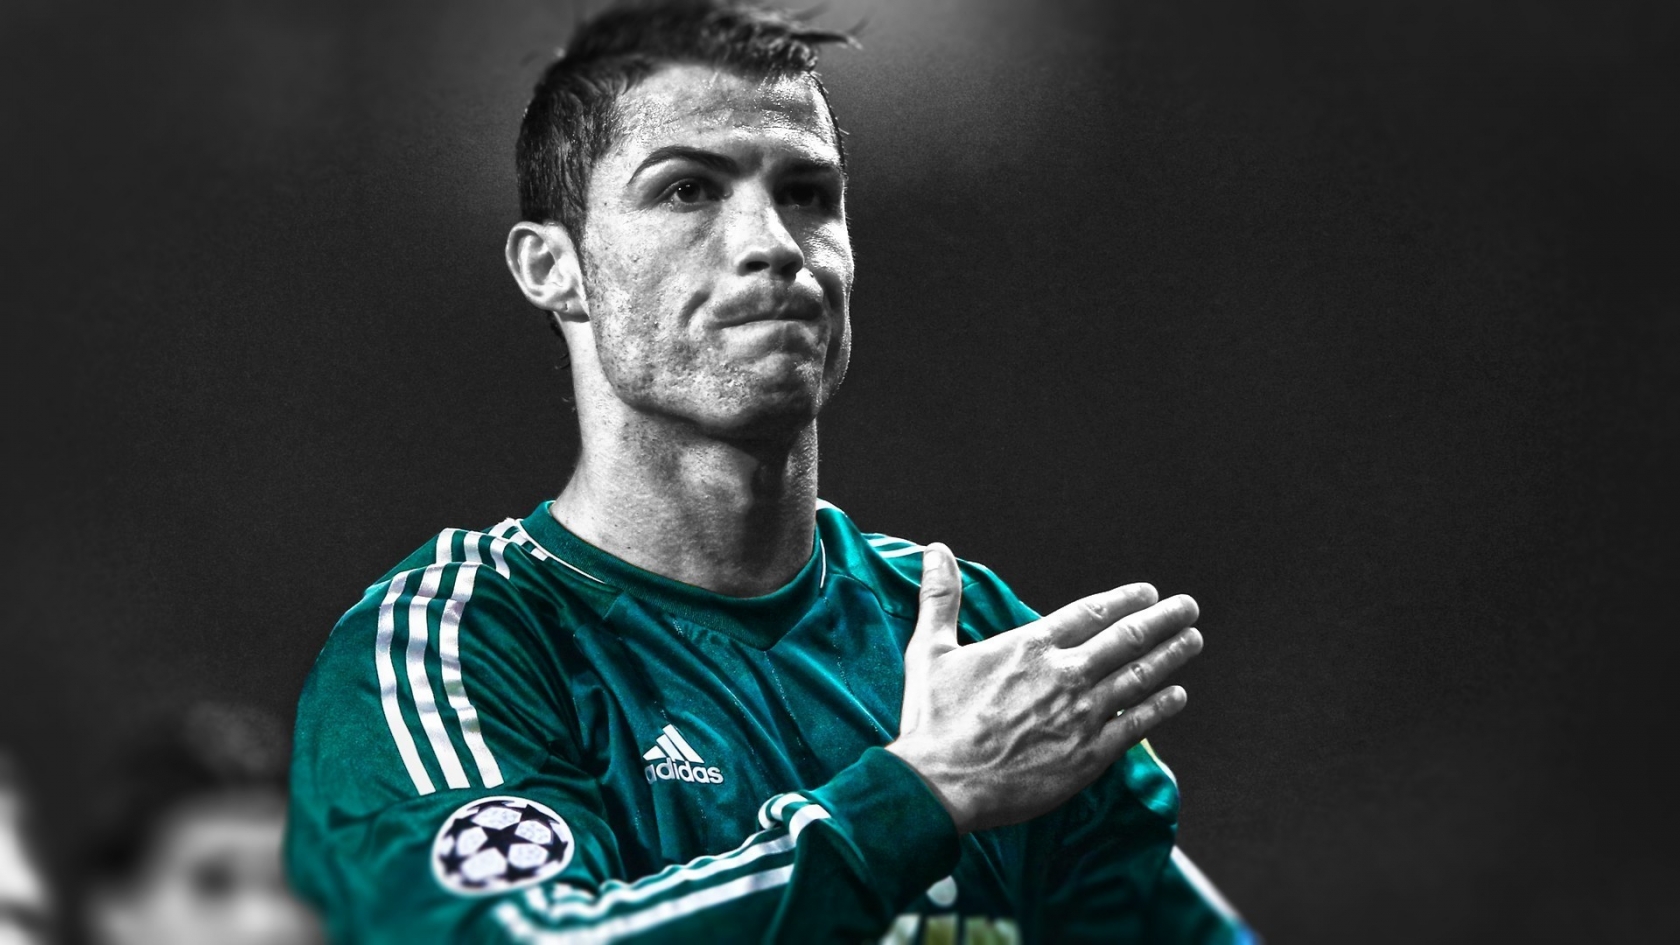 Cristiano Ronaldo Monochrome for 1680 x 945 HDTV resolution